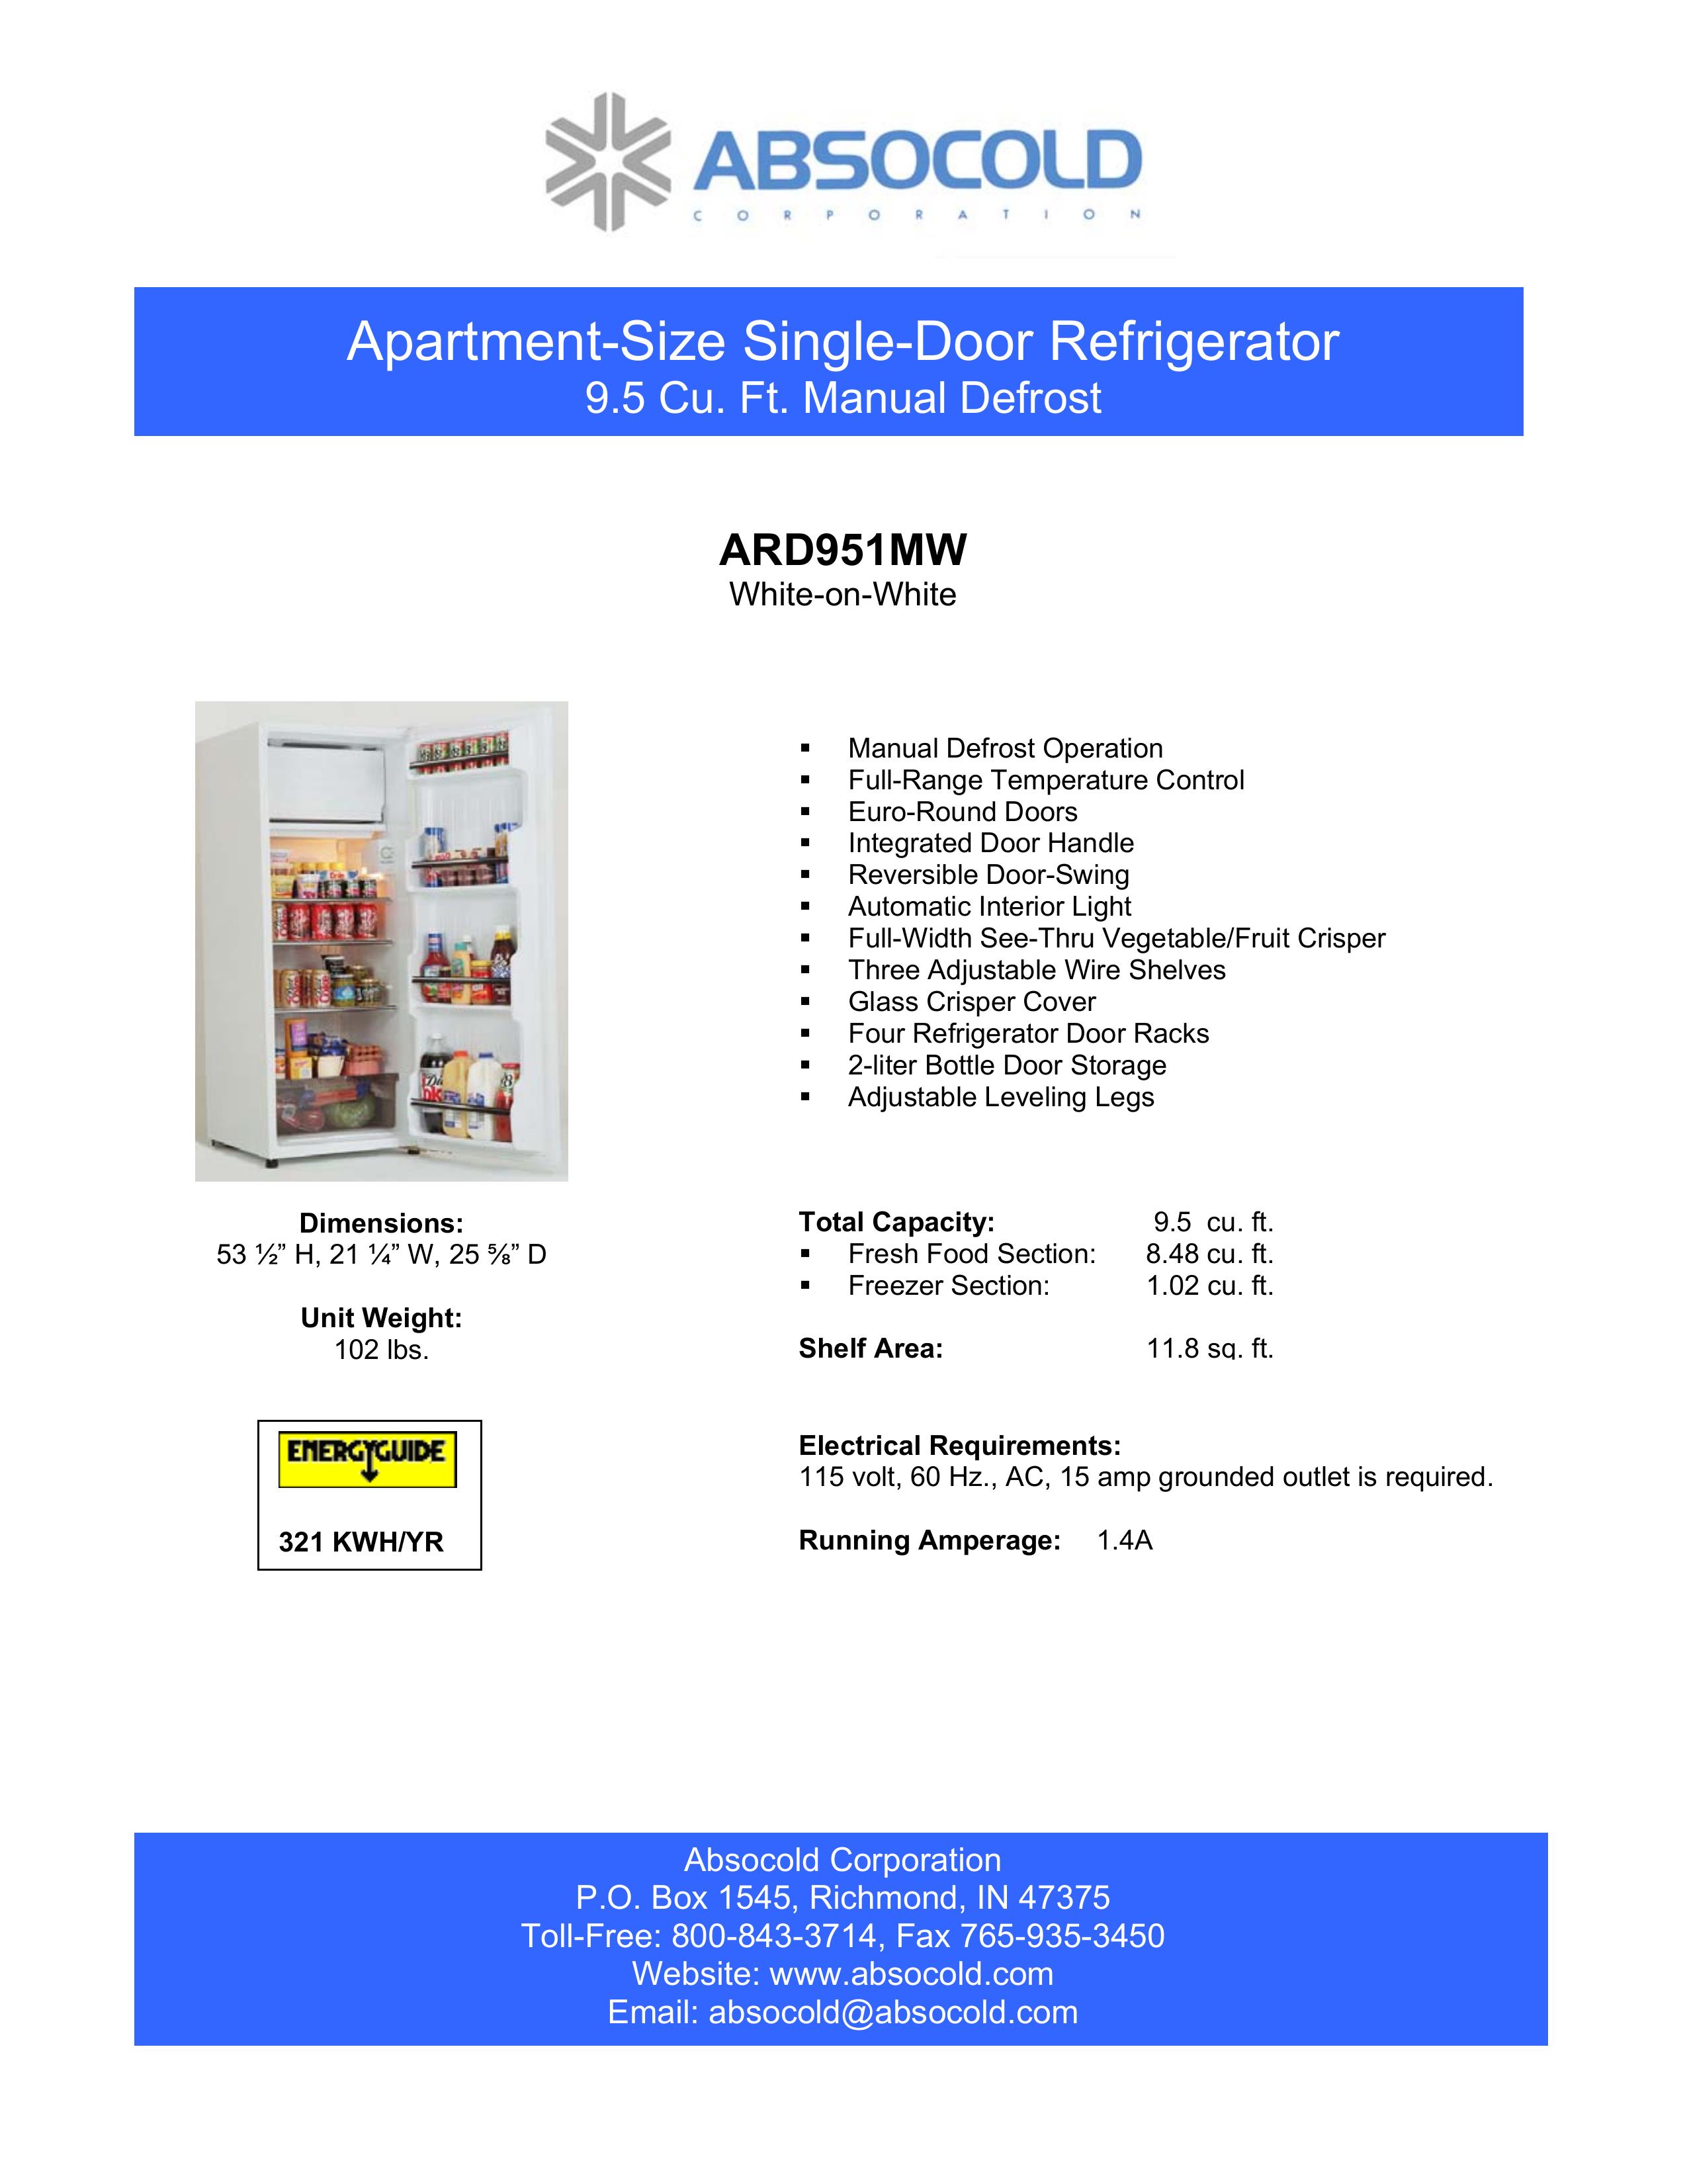 Absocold Corp ARD951MW Refrigerator User Manual